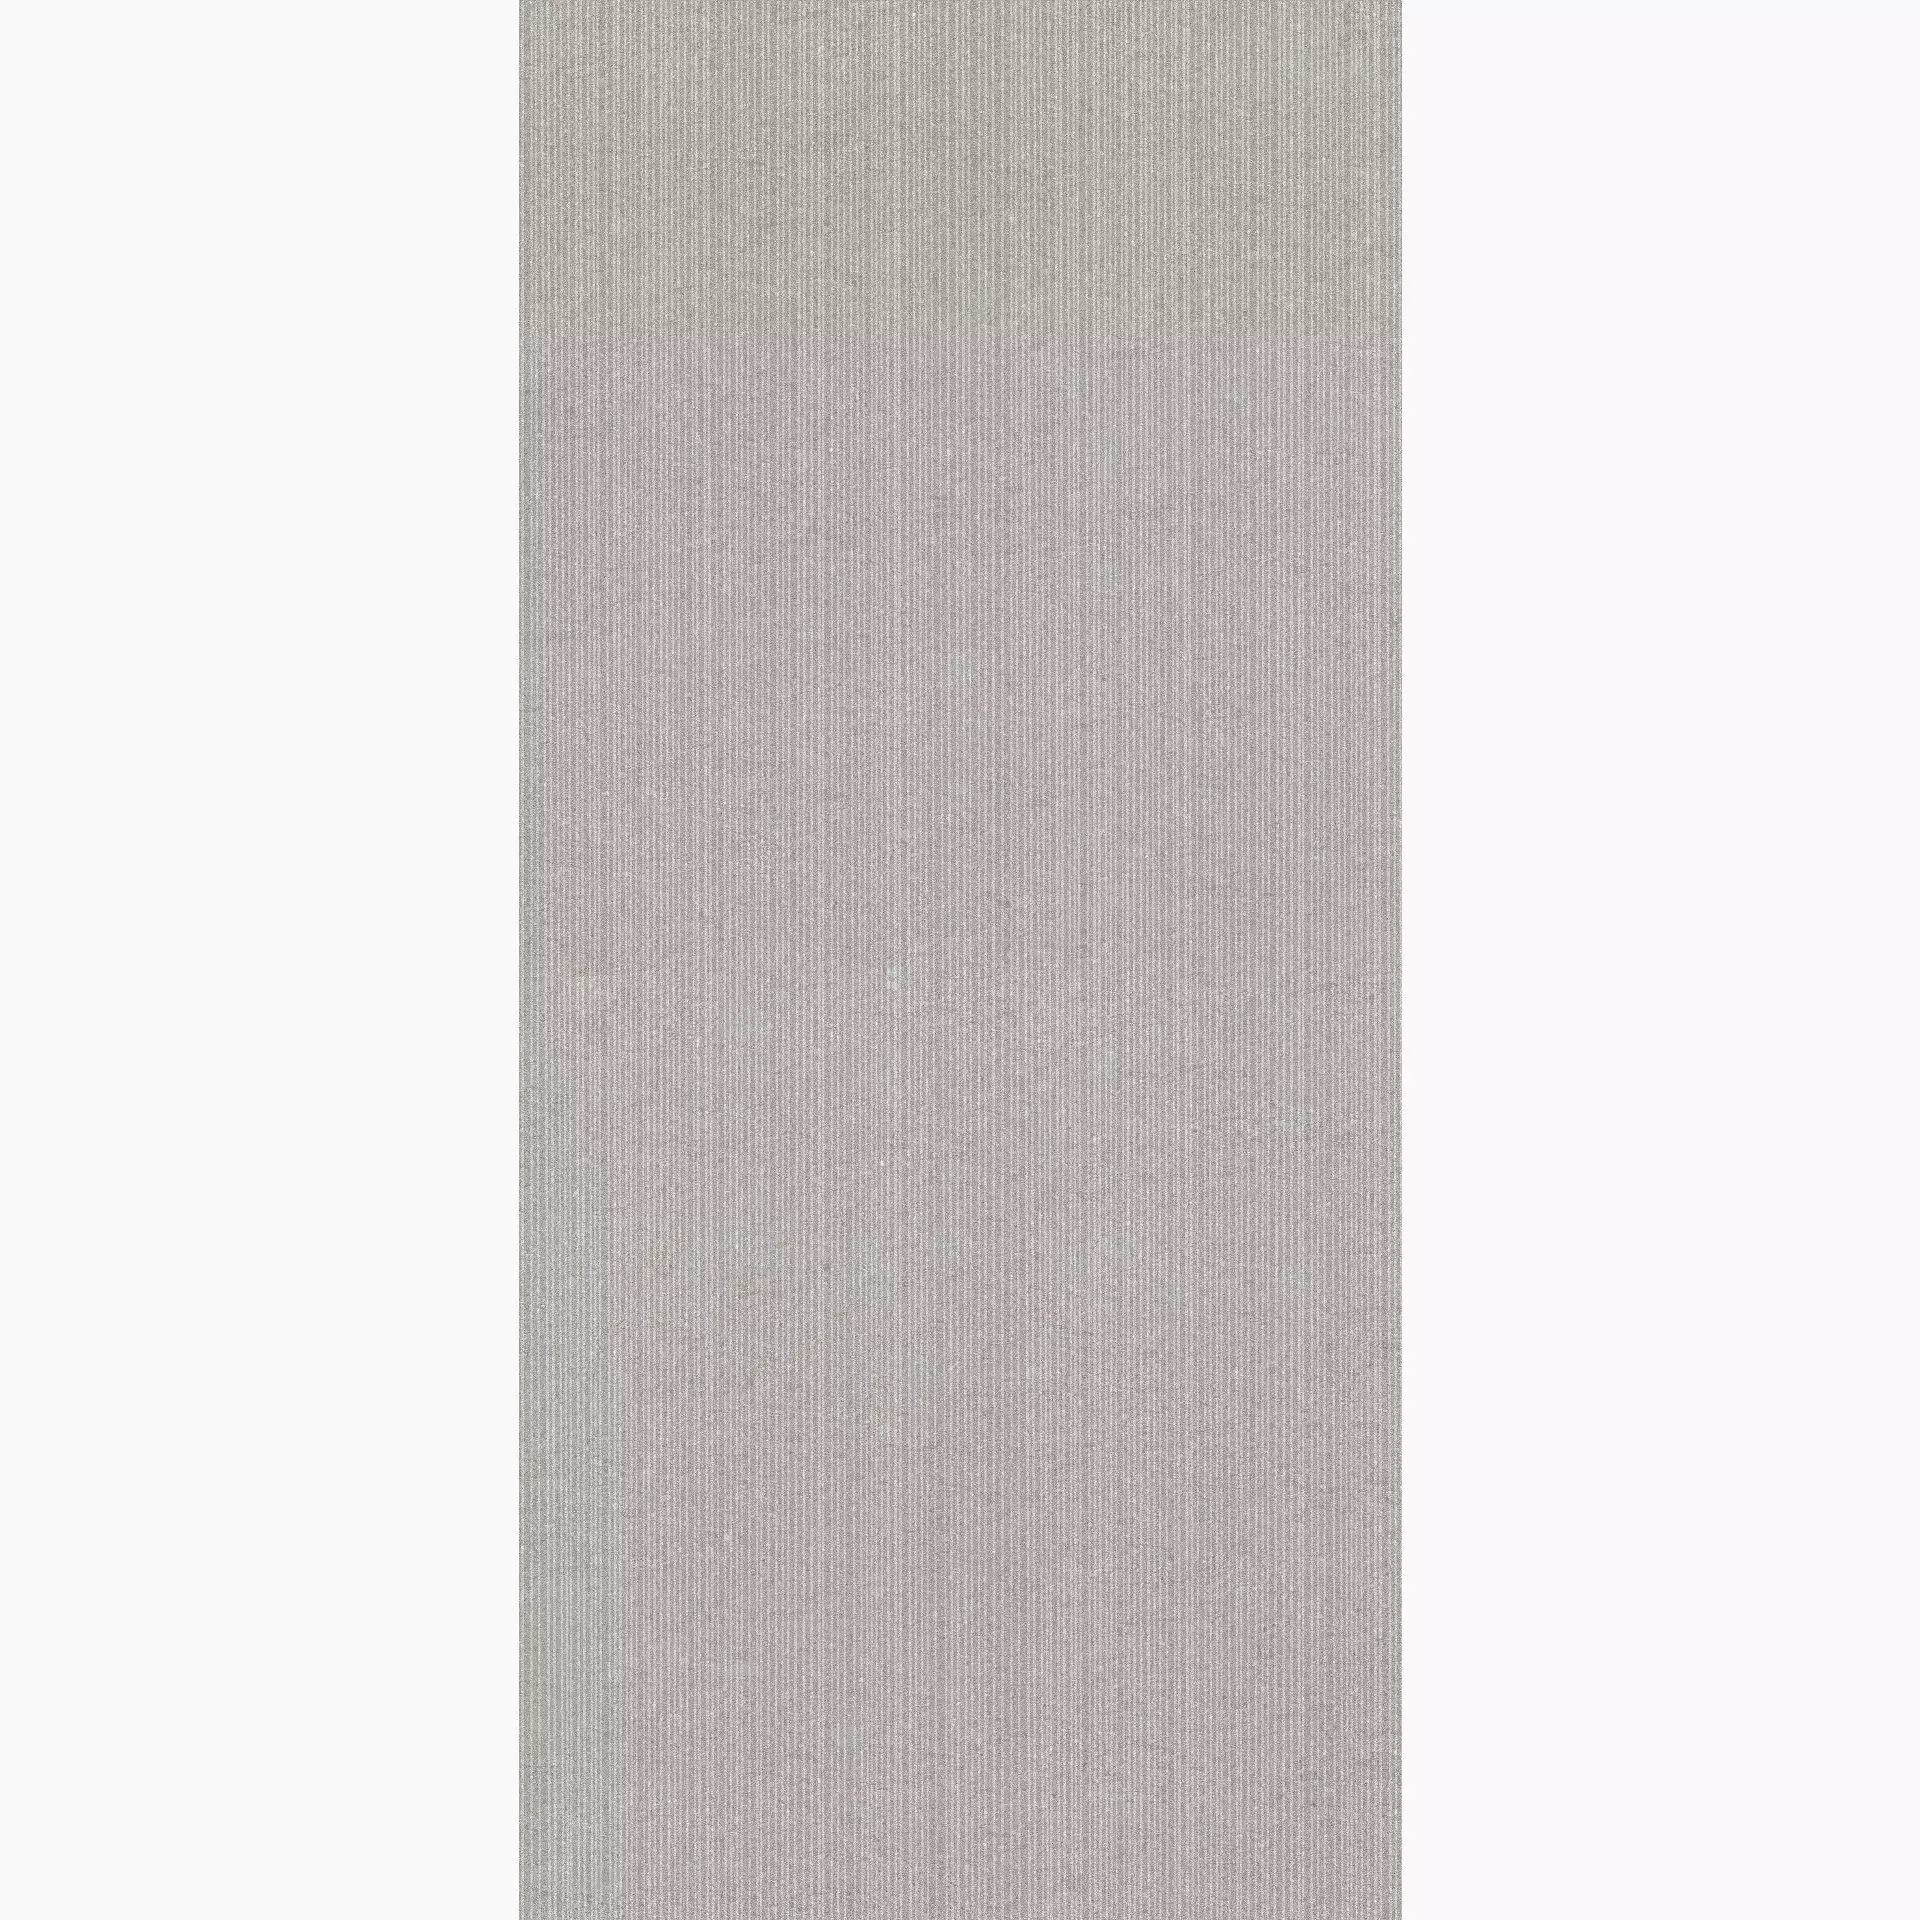 Coem Tweed Stone Grey Naturale Grey TWS363R natur struktur 30x60cm Straight rektifiziert 9mm